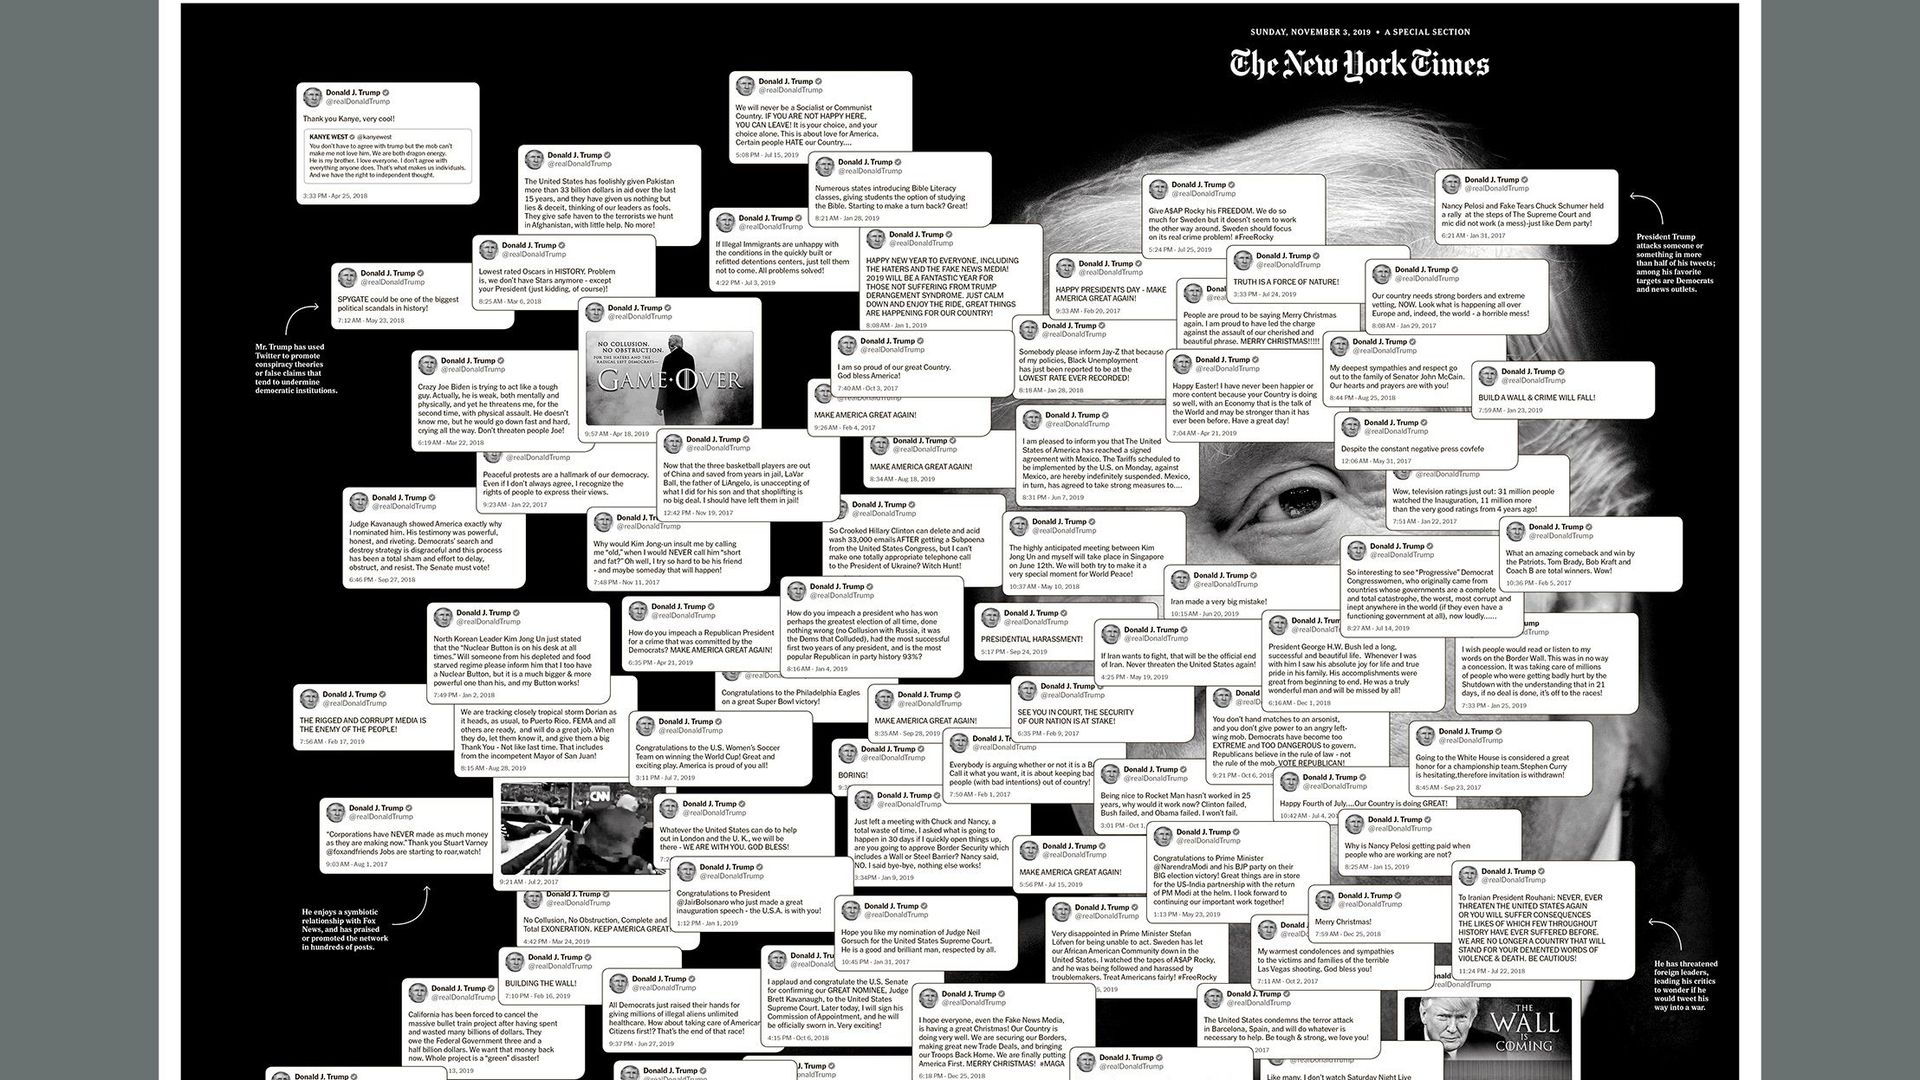 NYT graphic of Trump's tweets